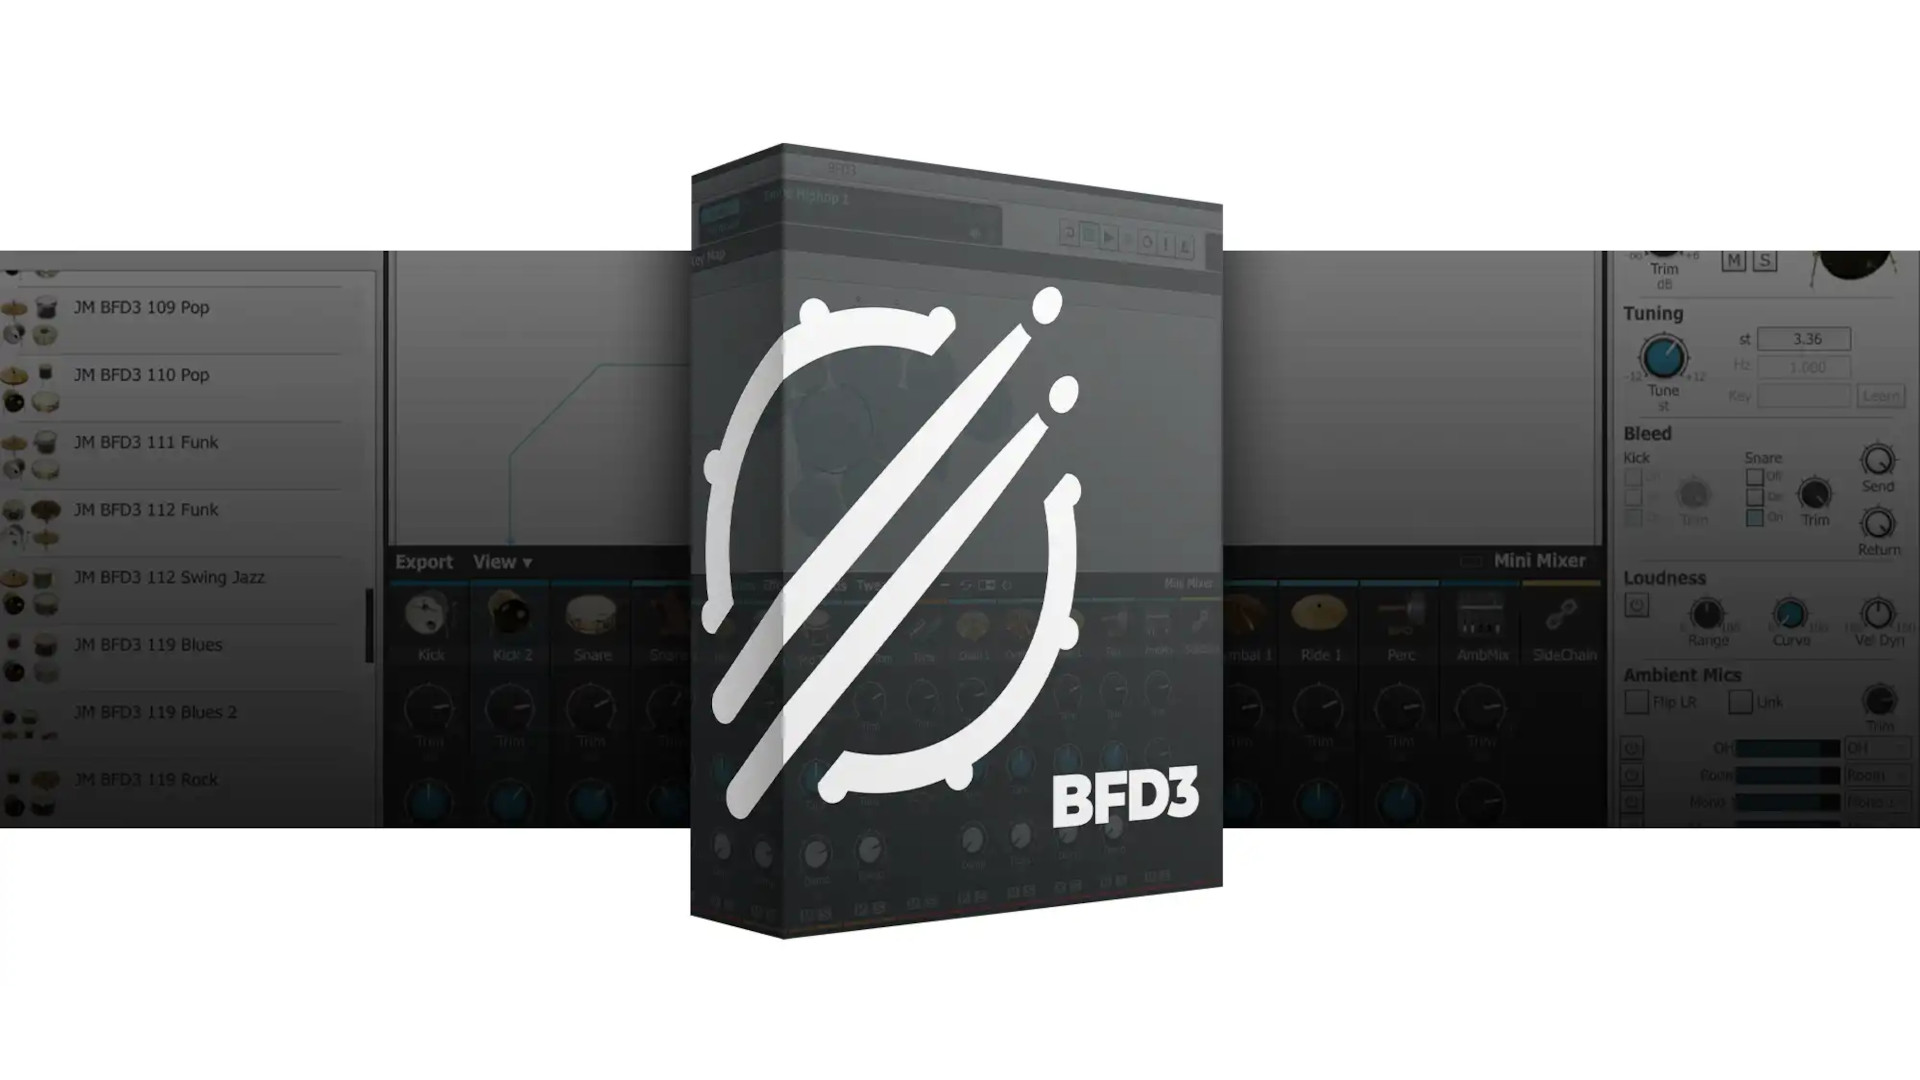 inmusic BFD3 PC/MAC CD Key [USD 100.57]